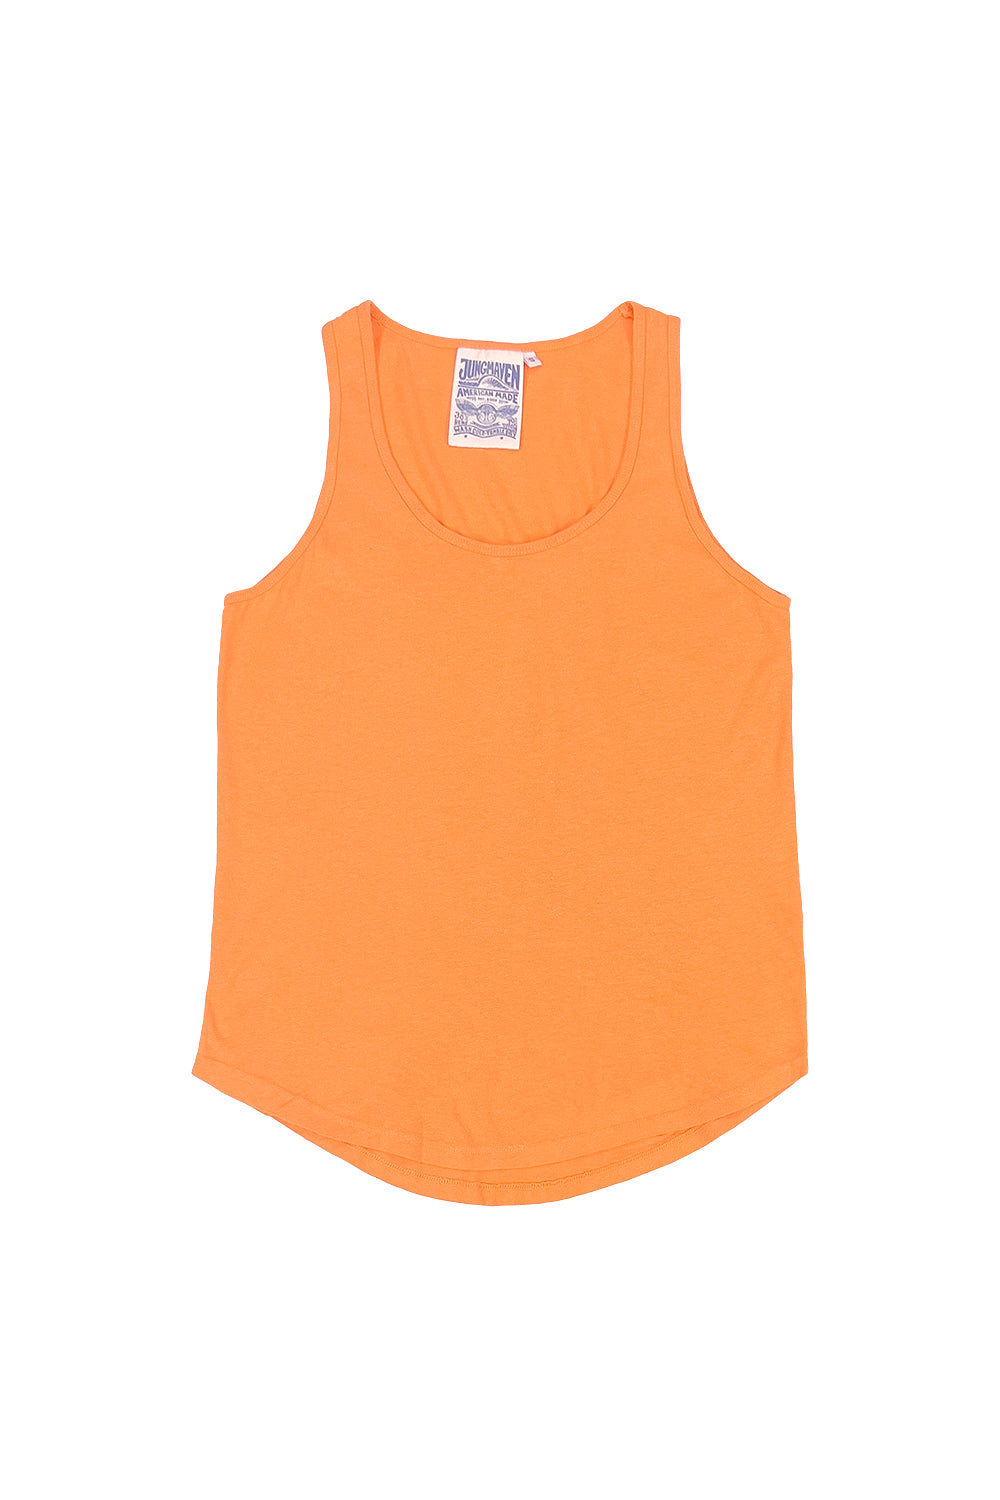 Truro Tank Top | Jungmaven Hemp Clothing & Accessories / Color: Apricot Crush